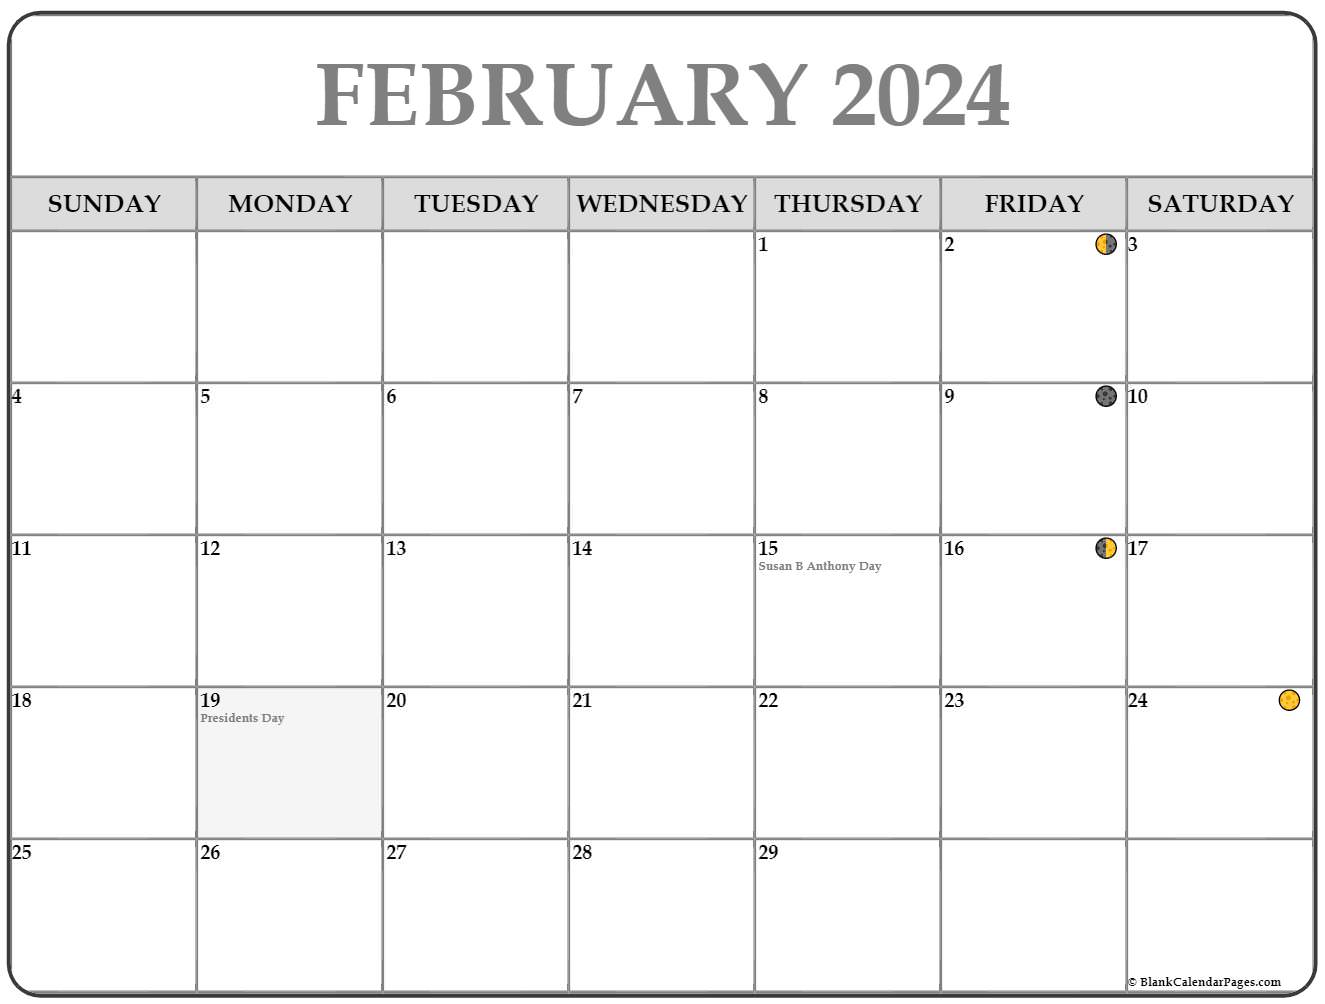 February 2020 calendar | free printable monthly calendars1767 x 1333